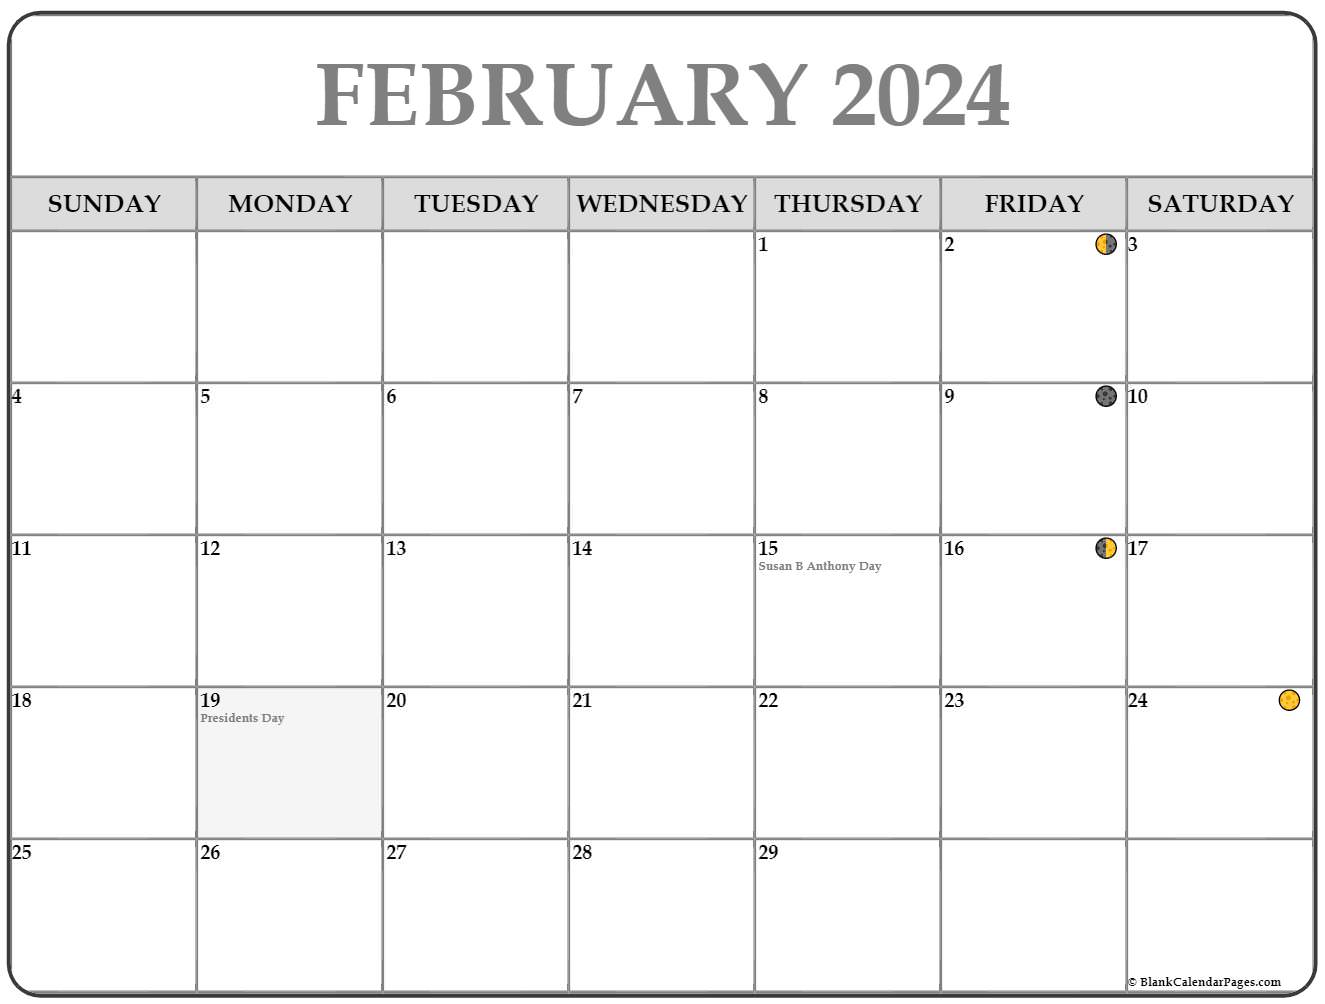 February 2020 calendar | free printable monthly calendars1767 x 1333